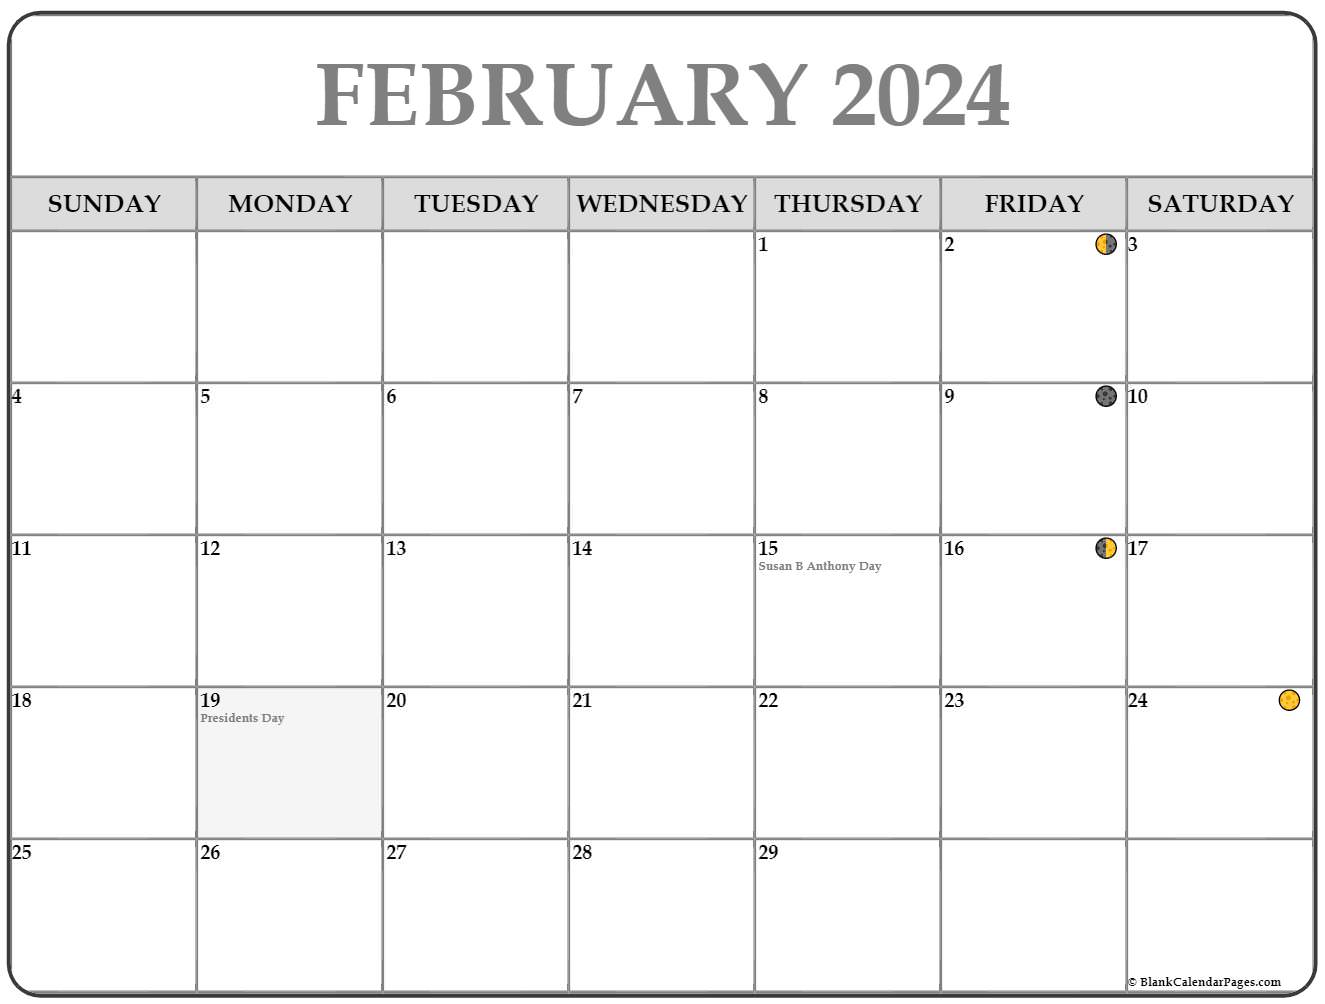 February 2020 calendar | free printable monthly calendars1767 x 1333